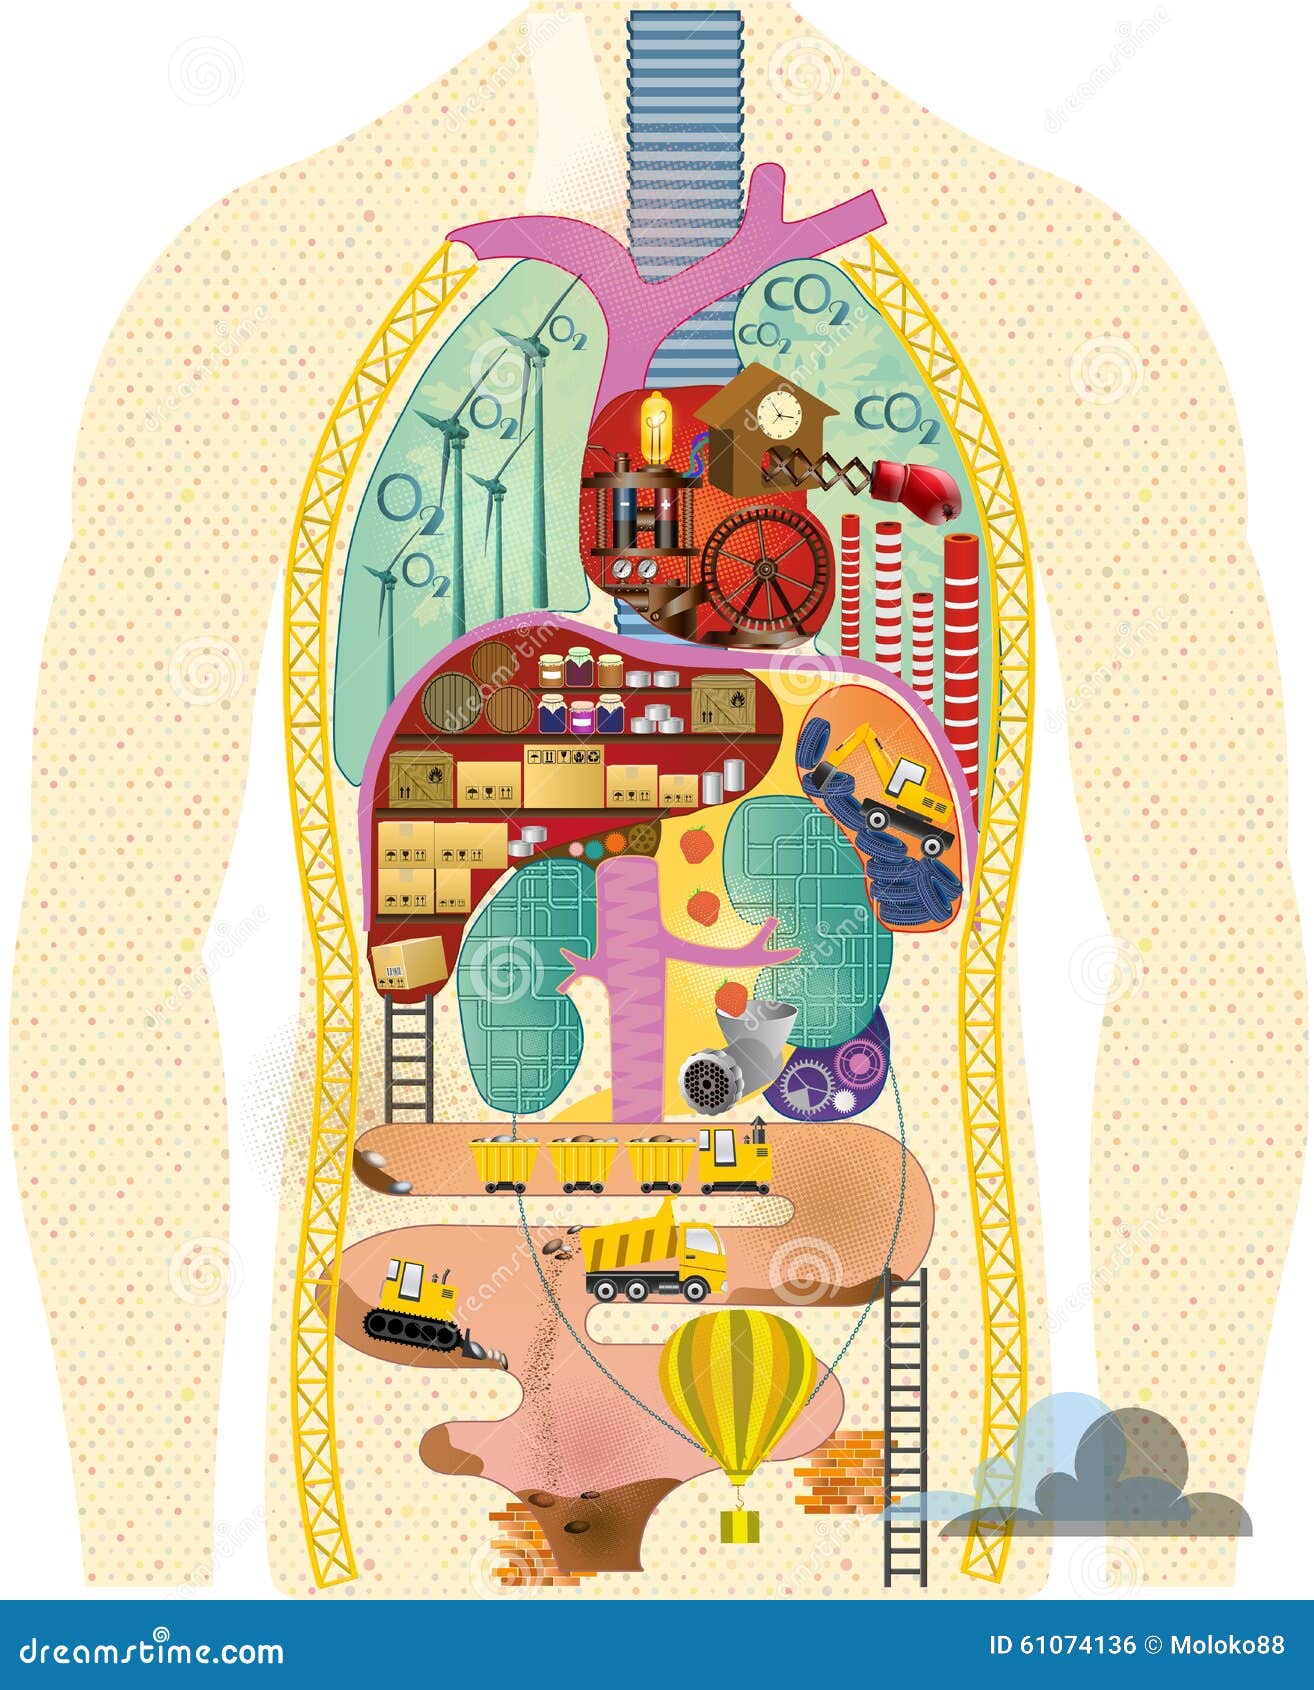 Anatomical Cartoon Map Stock Illustration - Image: 61074136